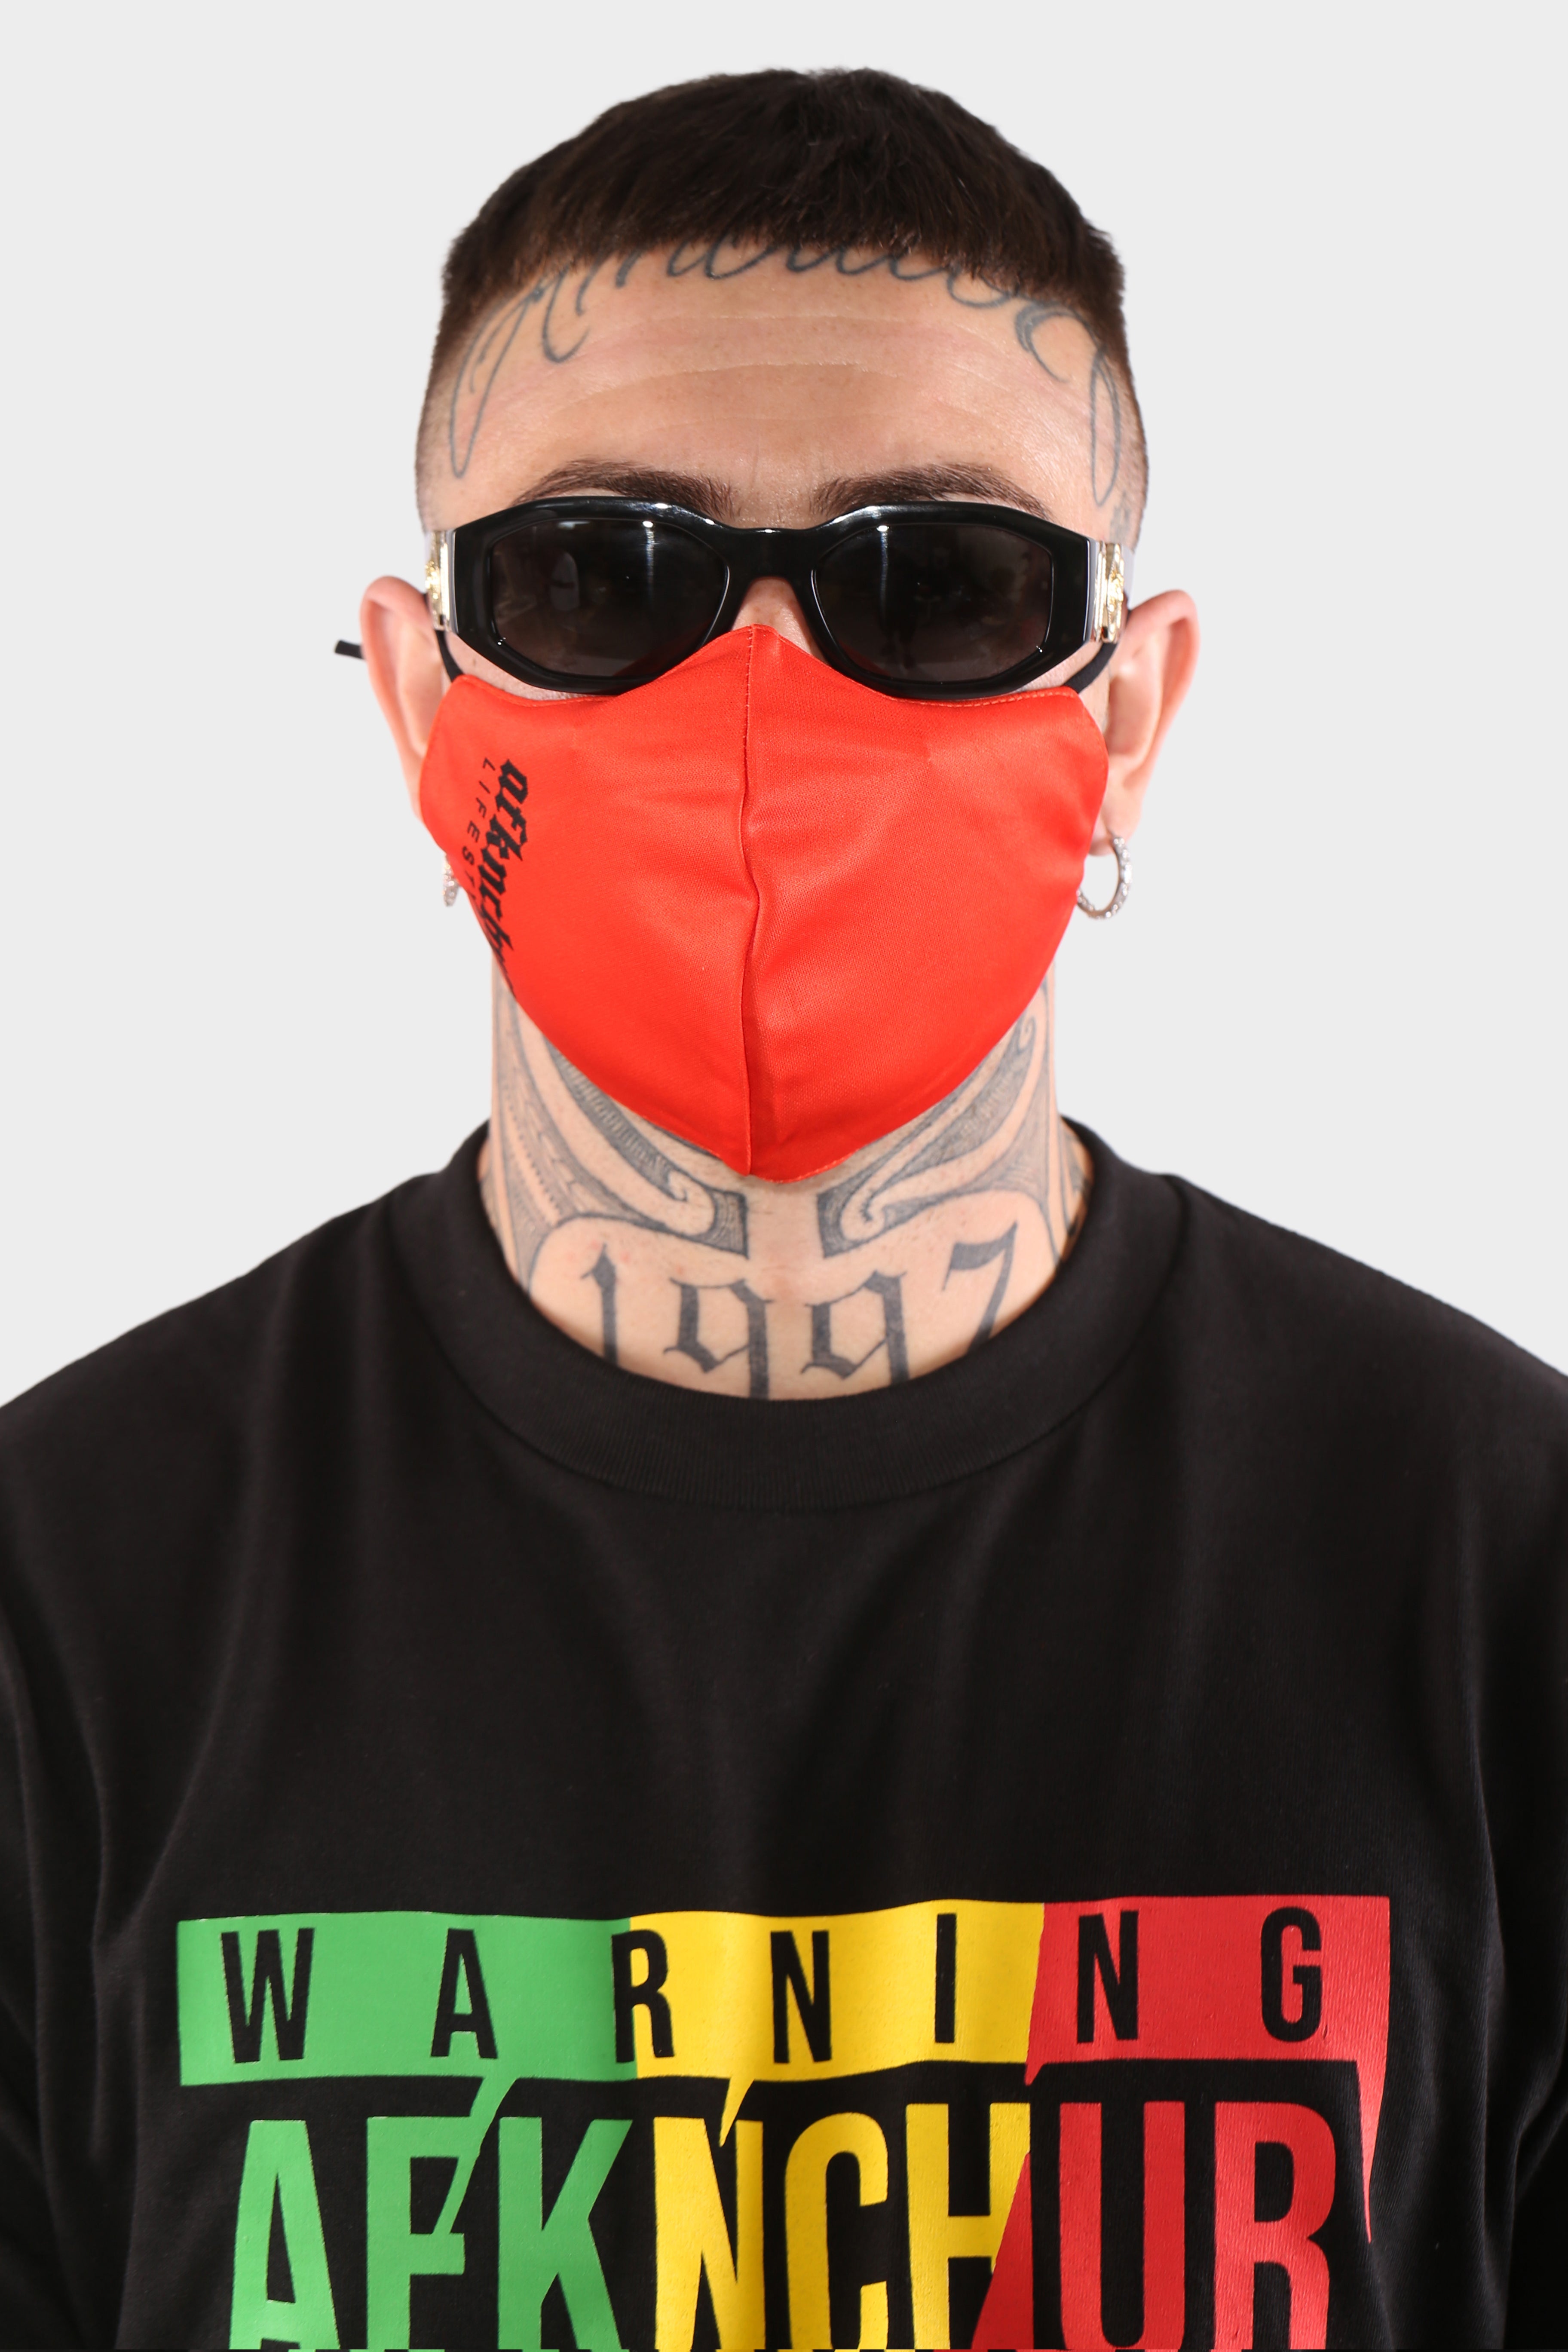 AFKNCHUR Lifestyle Vert Mask Red/Black